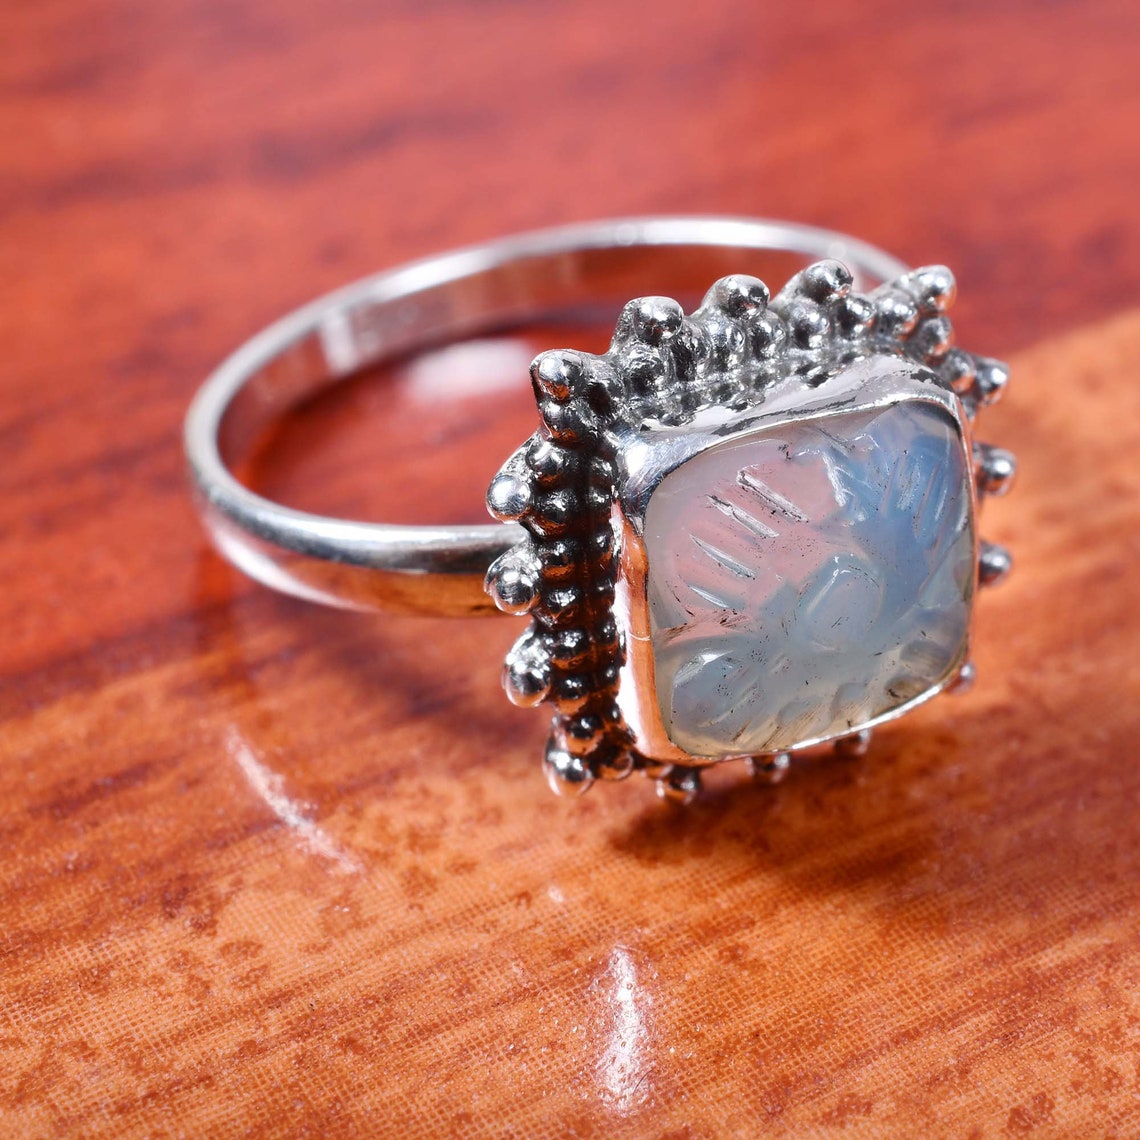 925 Sterling Silver Fire Opal Ring